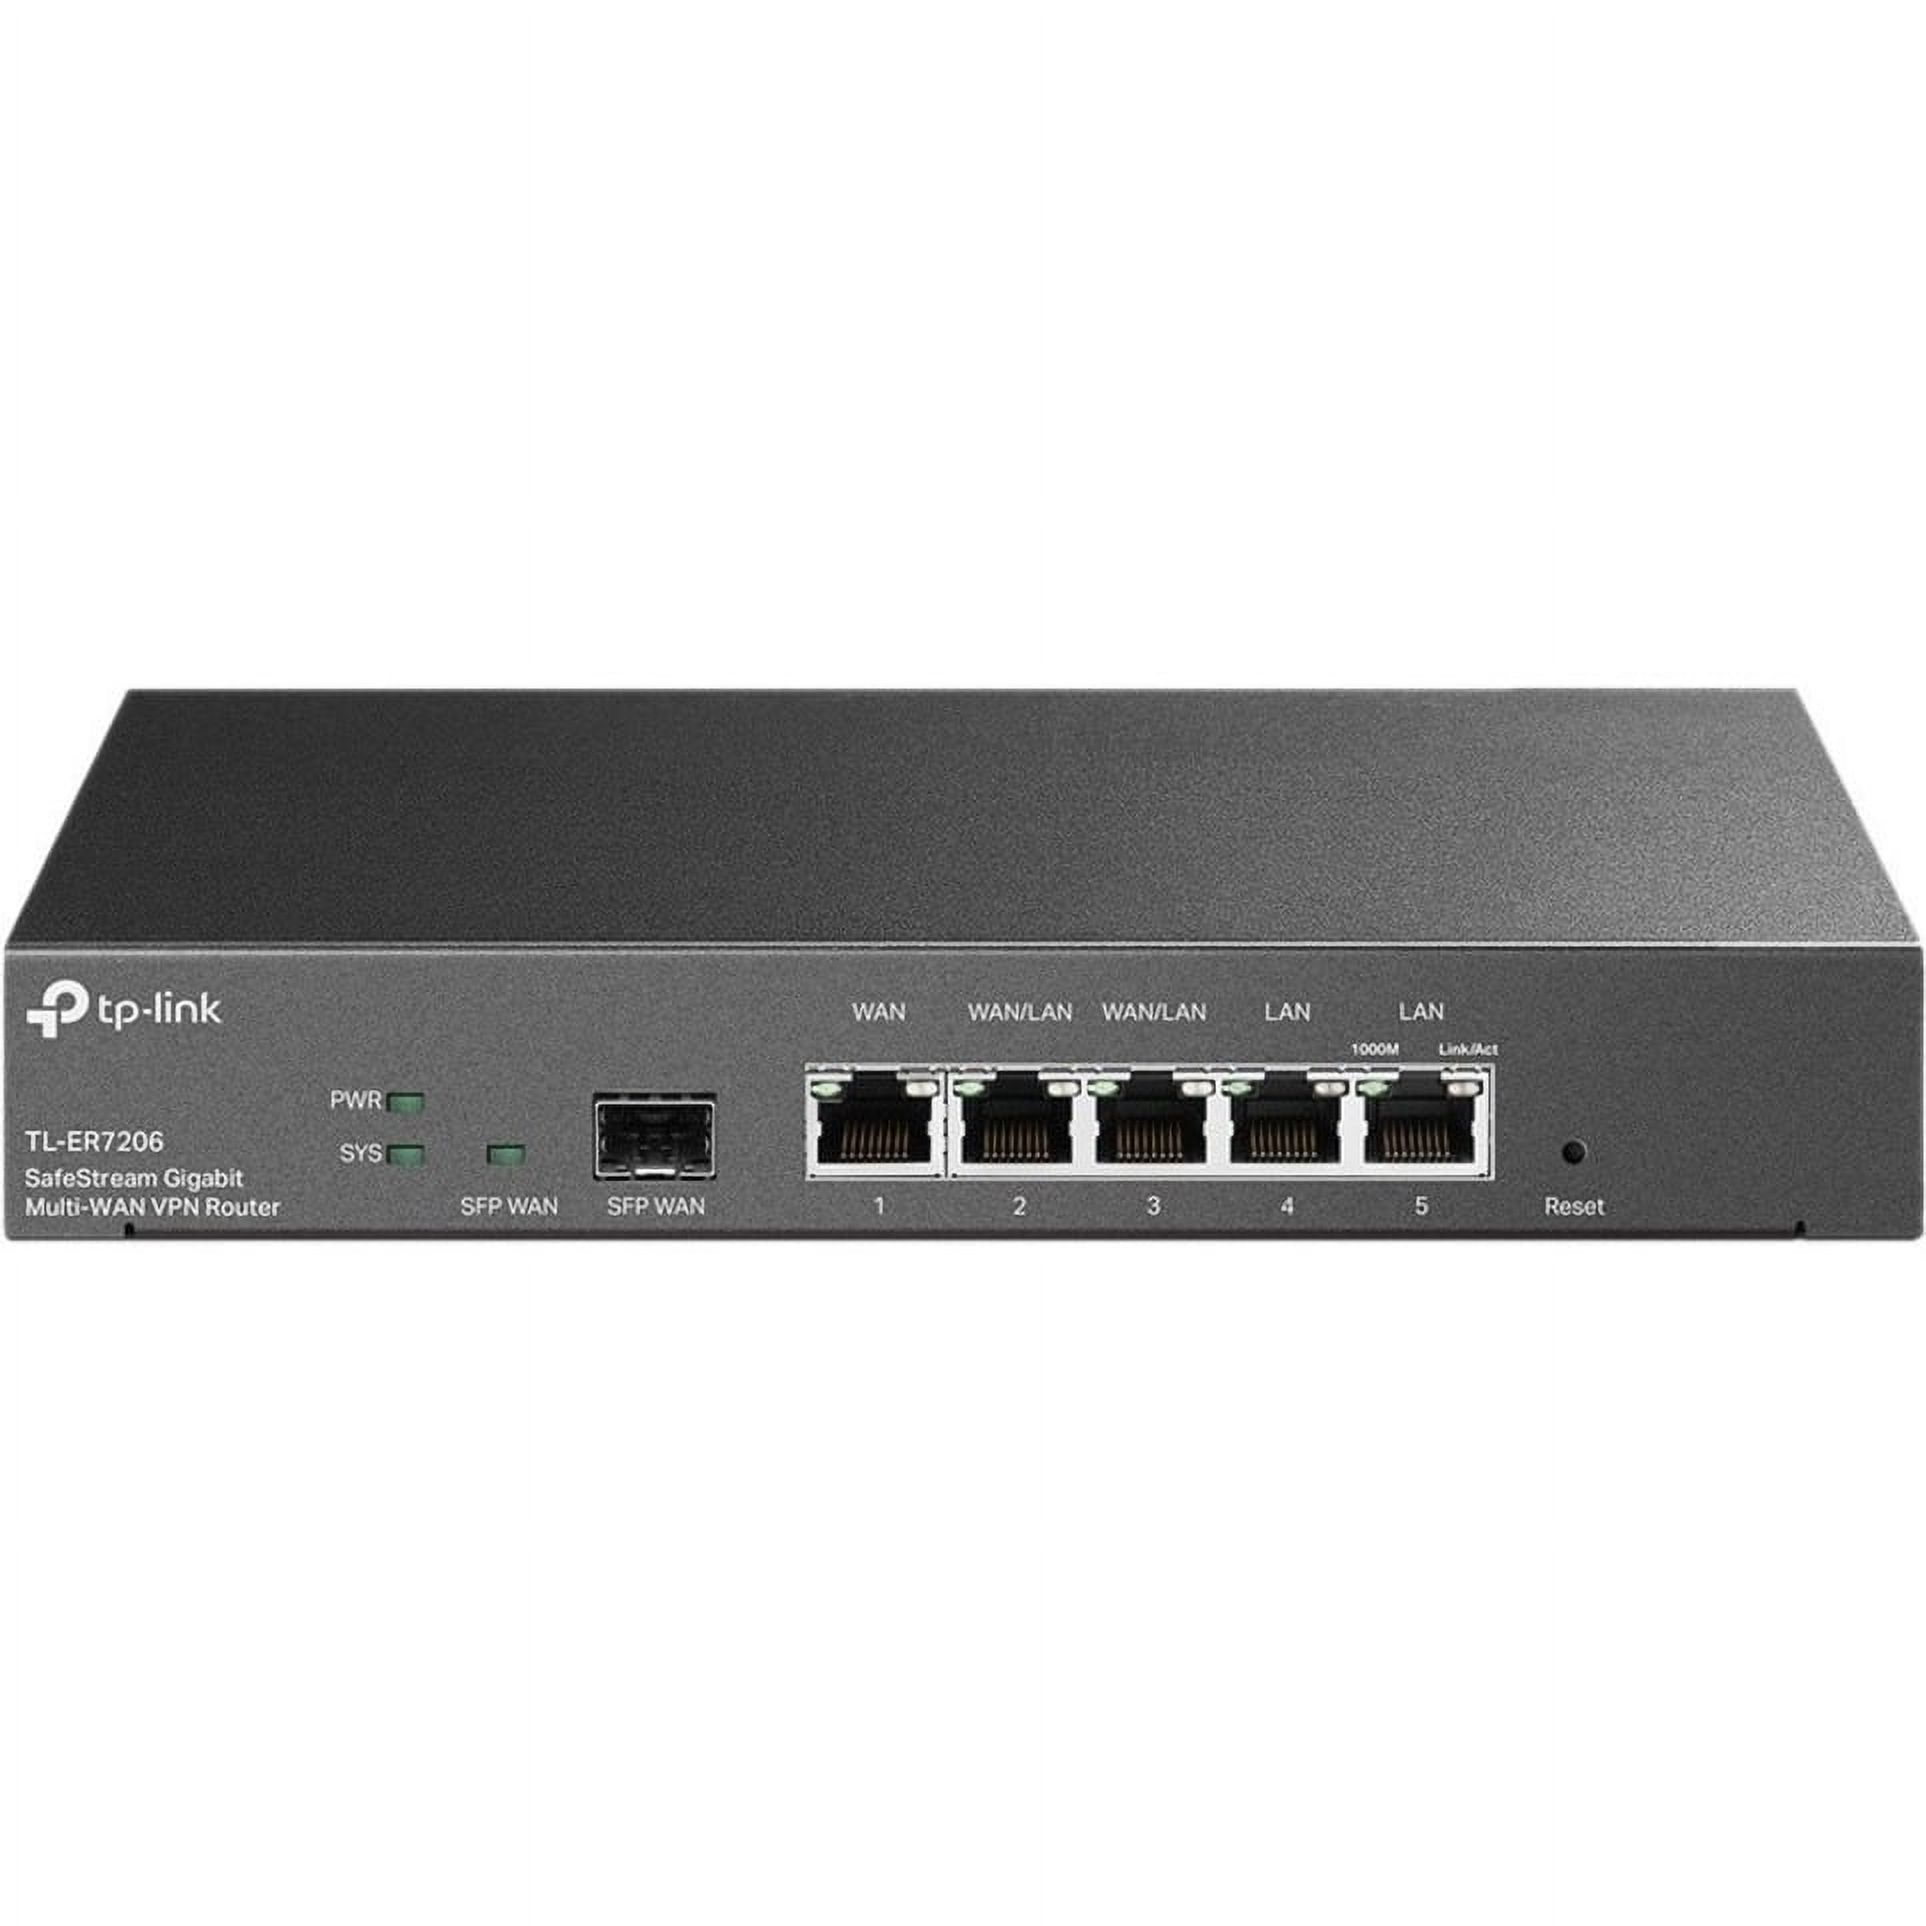 TP-Link ER7206 - Multi-WAN Professional Wired Gigabit VPN Router - image 1 of 10